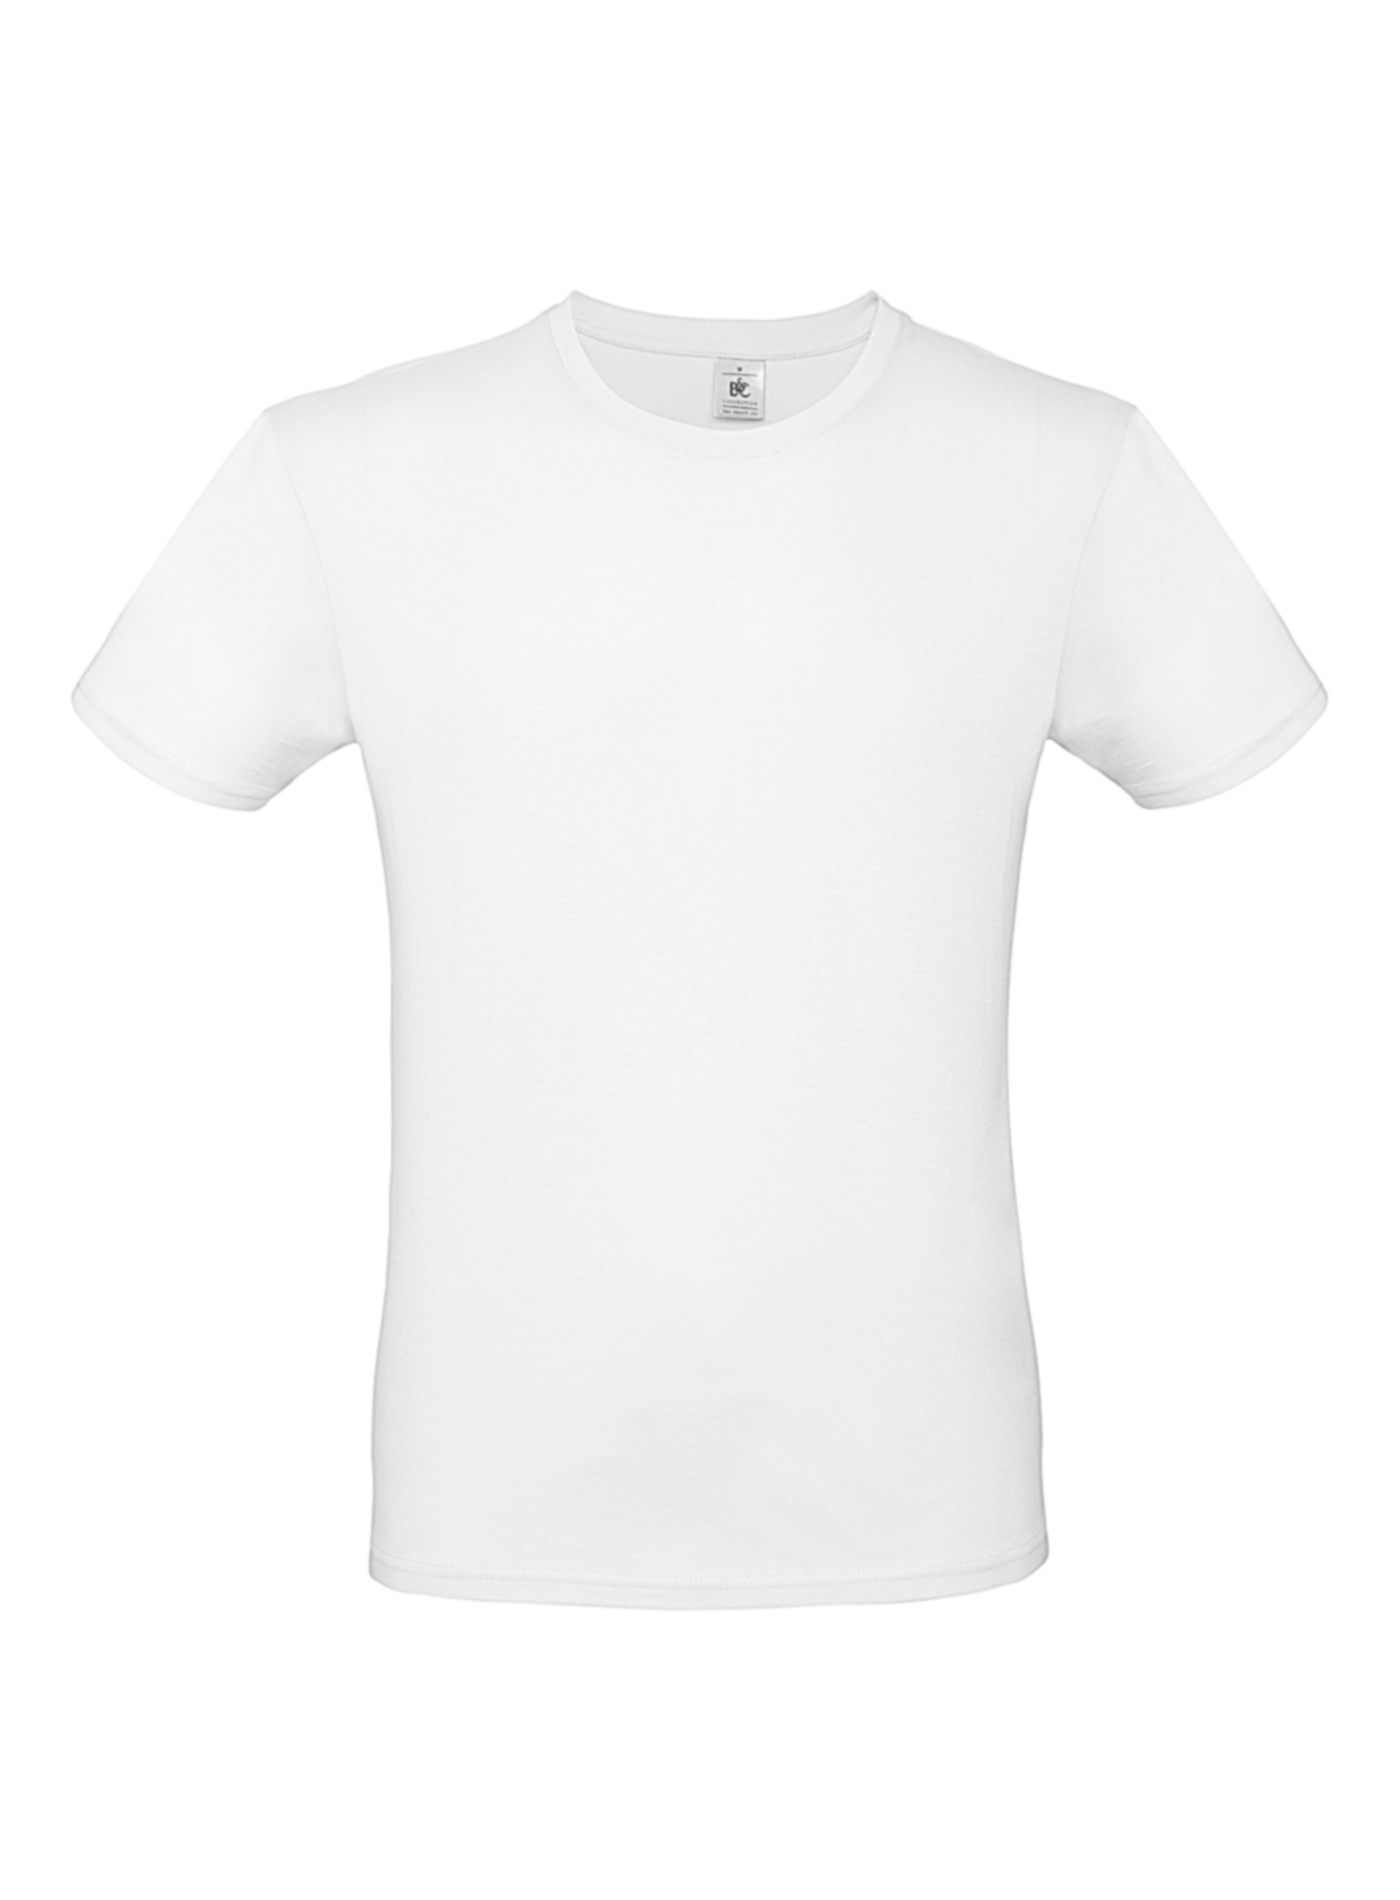 Pánské tričko B&C - Bílá S